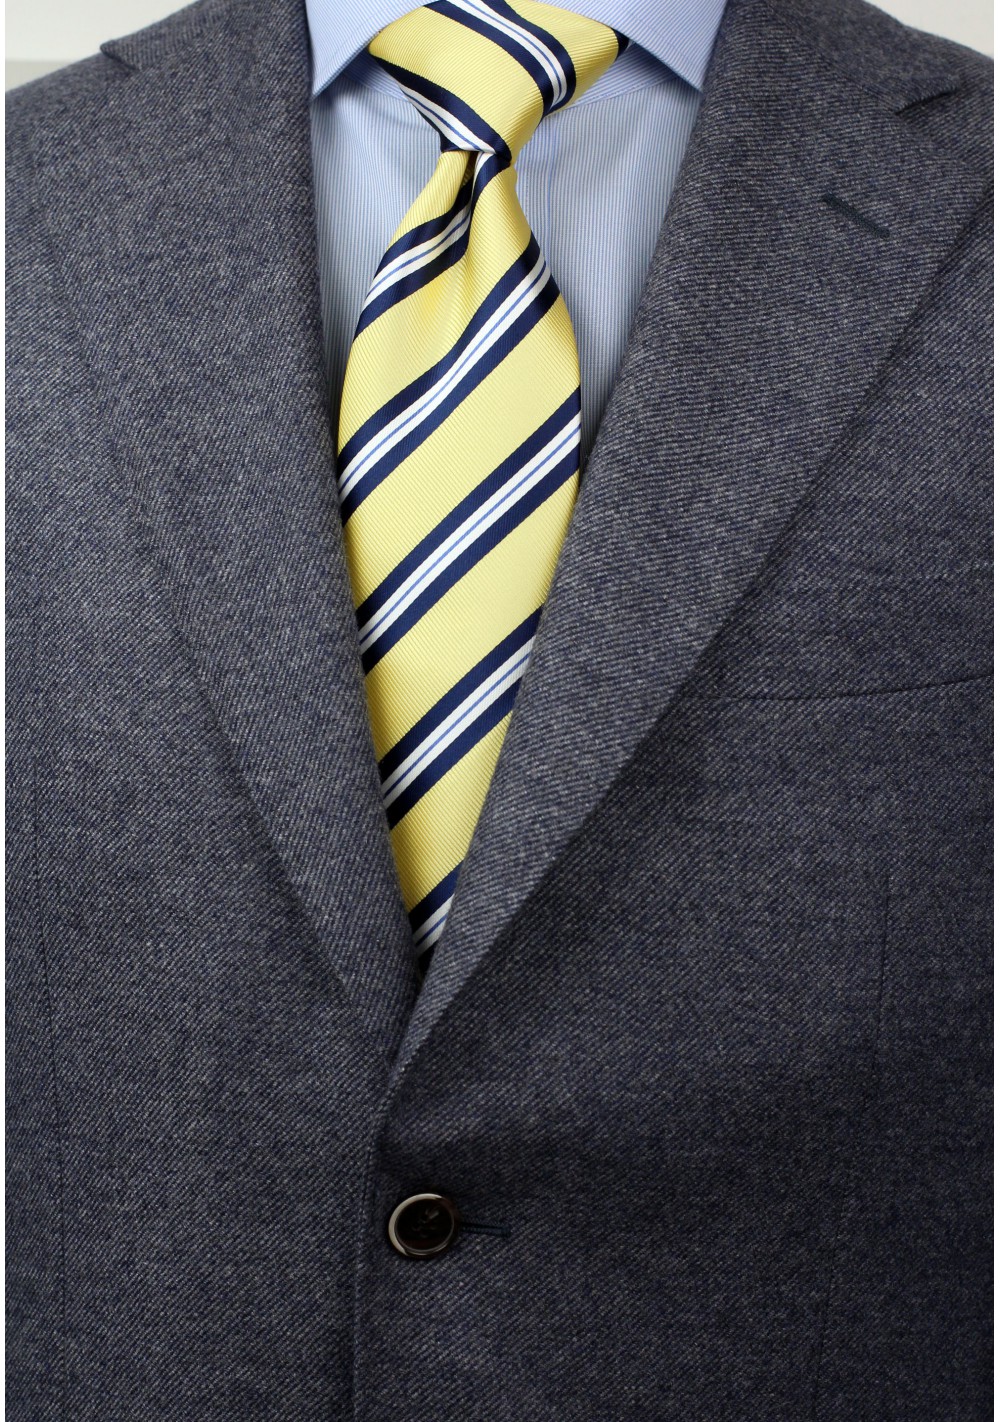 Preppy Repp Striped Summer Tie in Yellow | Bows-N-Ties.com